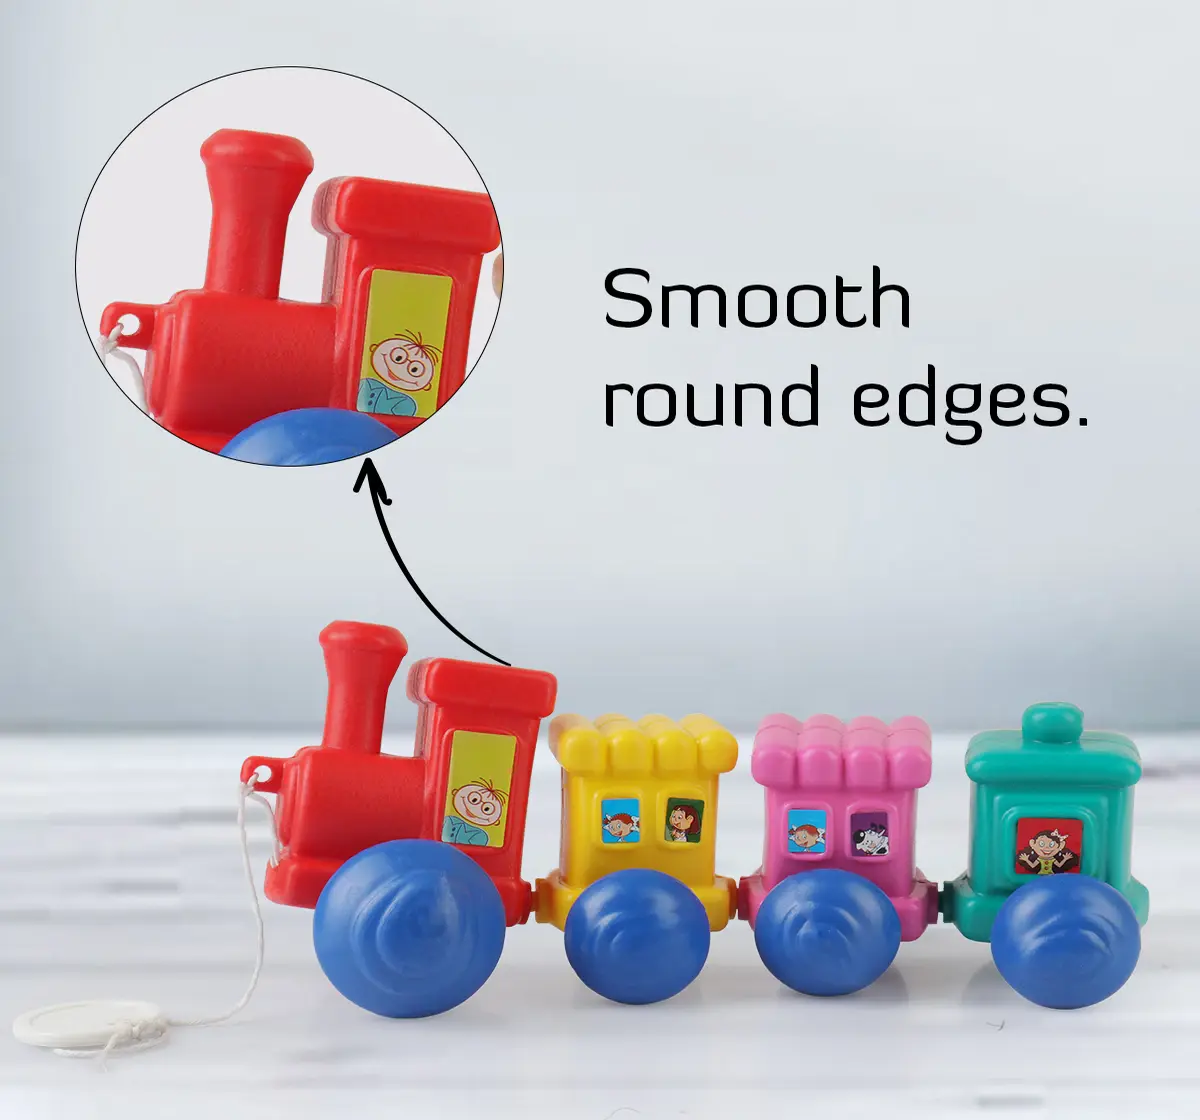 Shooting star Wobble wagon train Plastic toys for baby Multicolor 1Y+